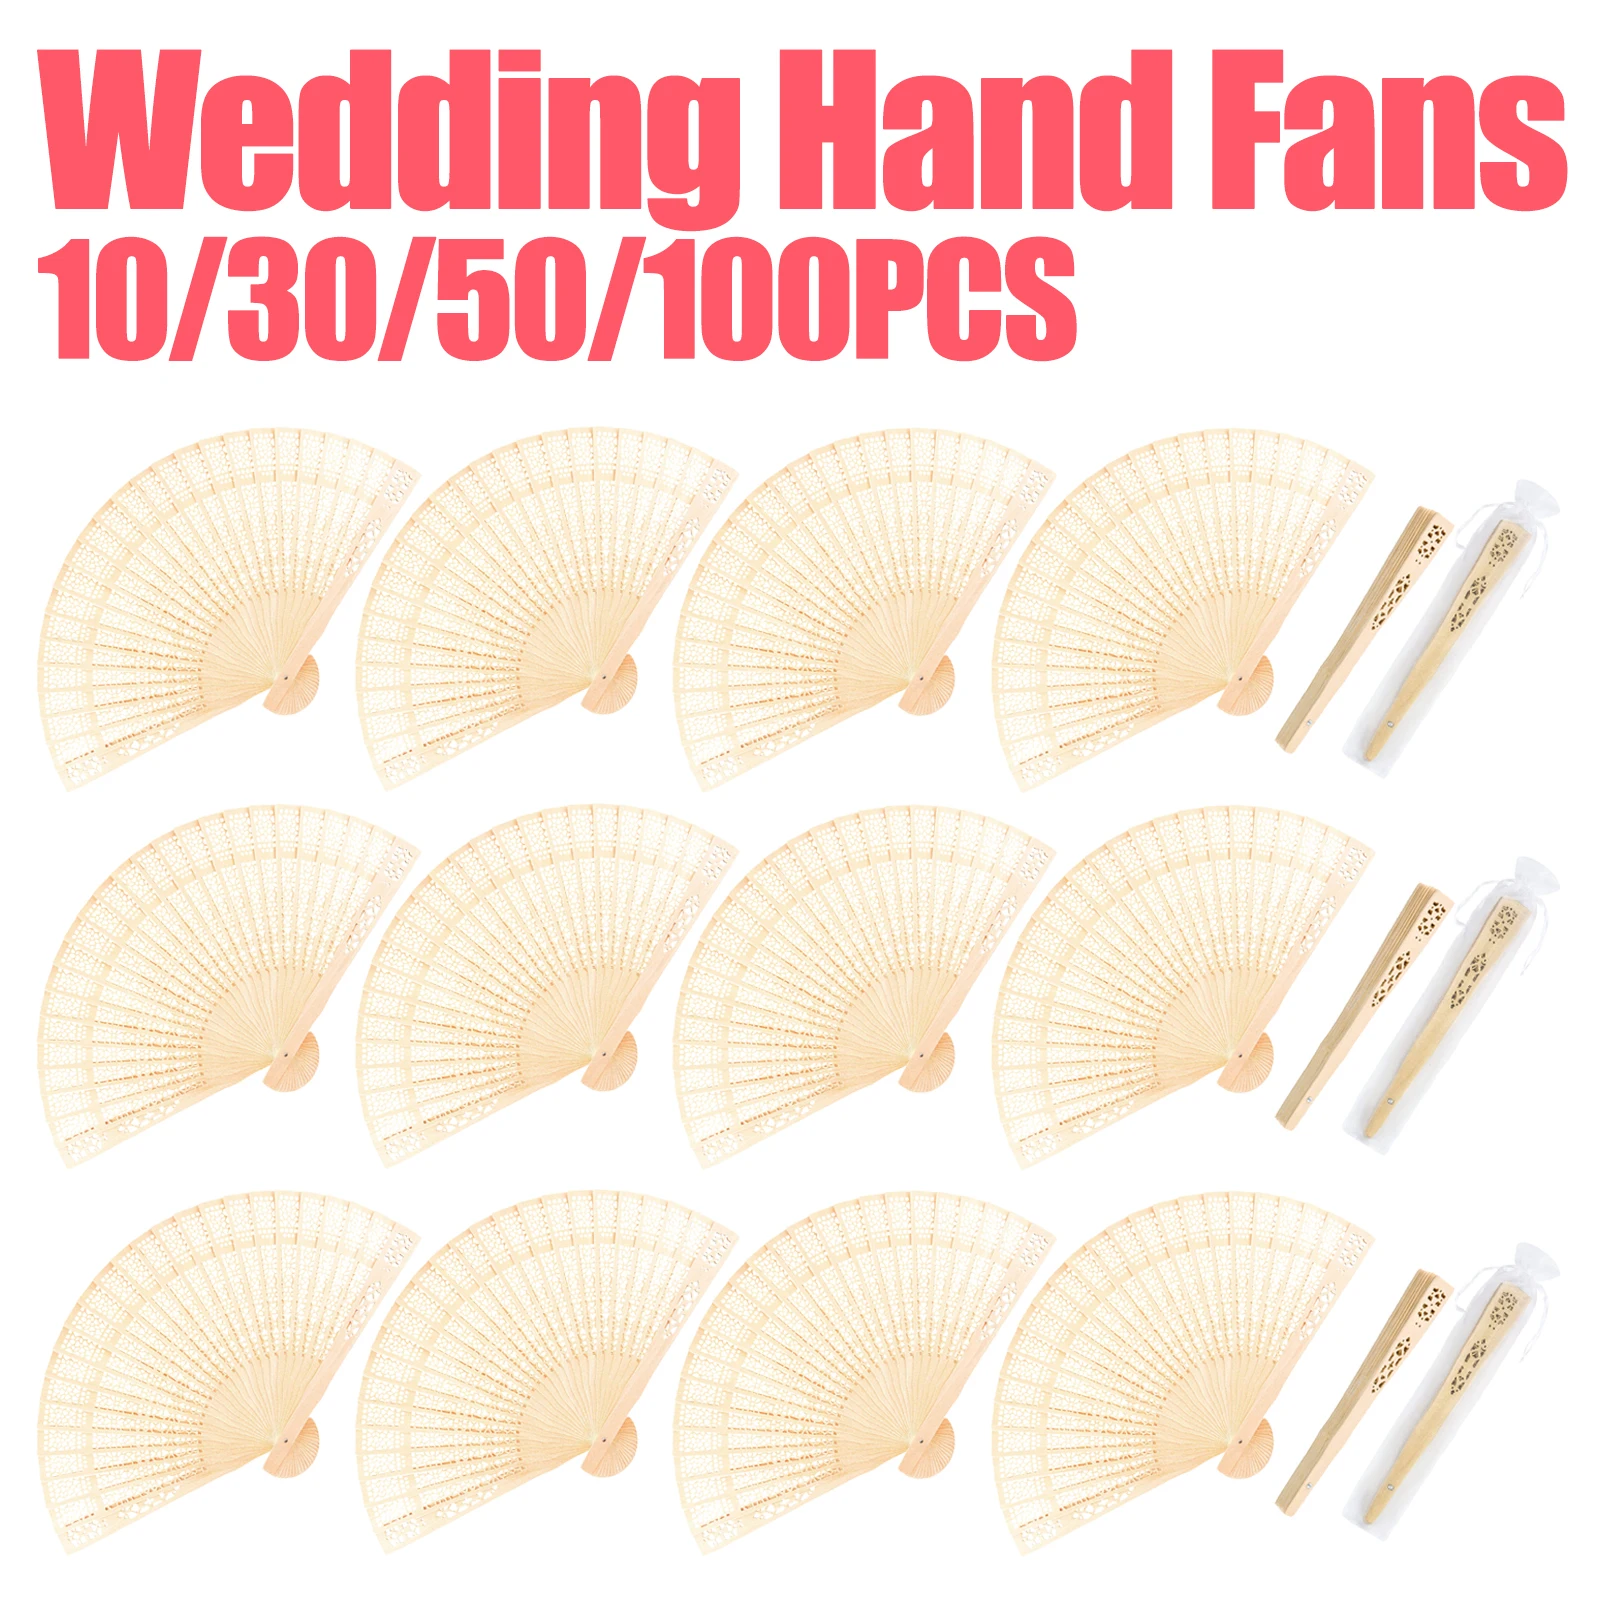 

Wedding Hand Wedding Sandalwood Fan 10/30/50/100pcs For Folding For Fan Wooden Hand Pai Pai Wedding Fans Hand Fans Guests Gift